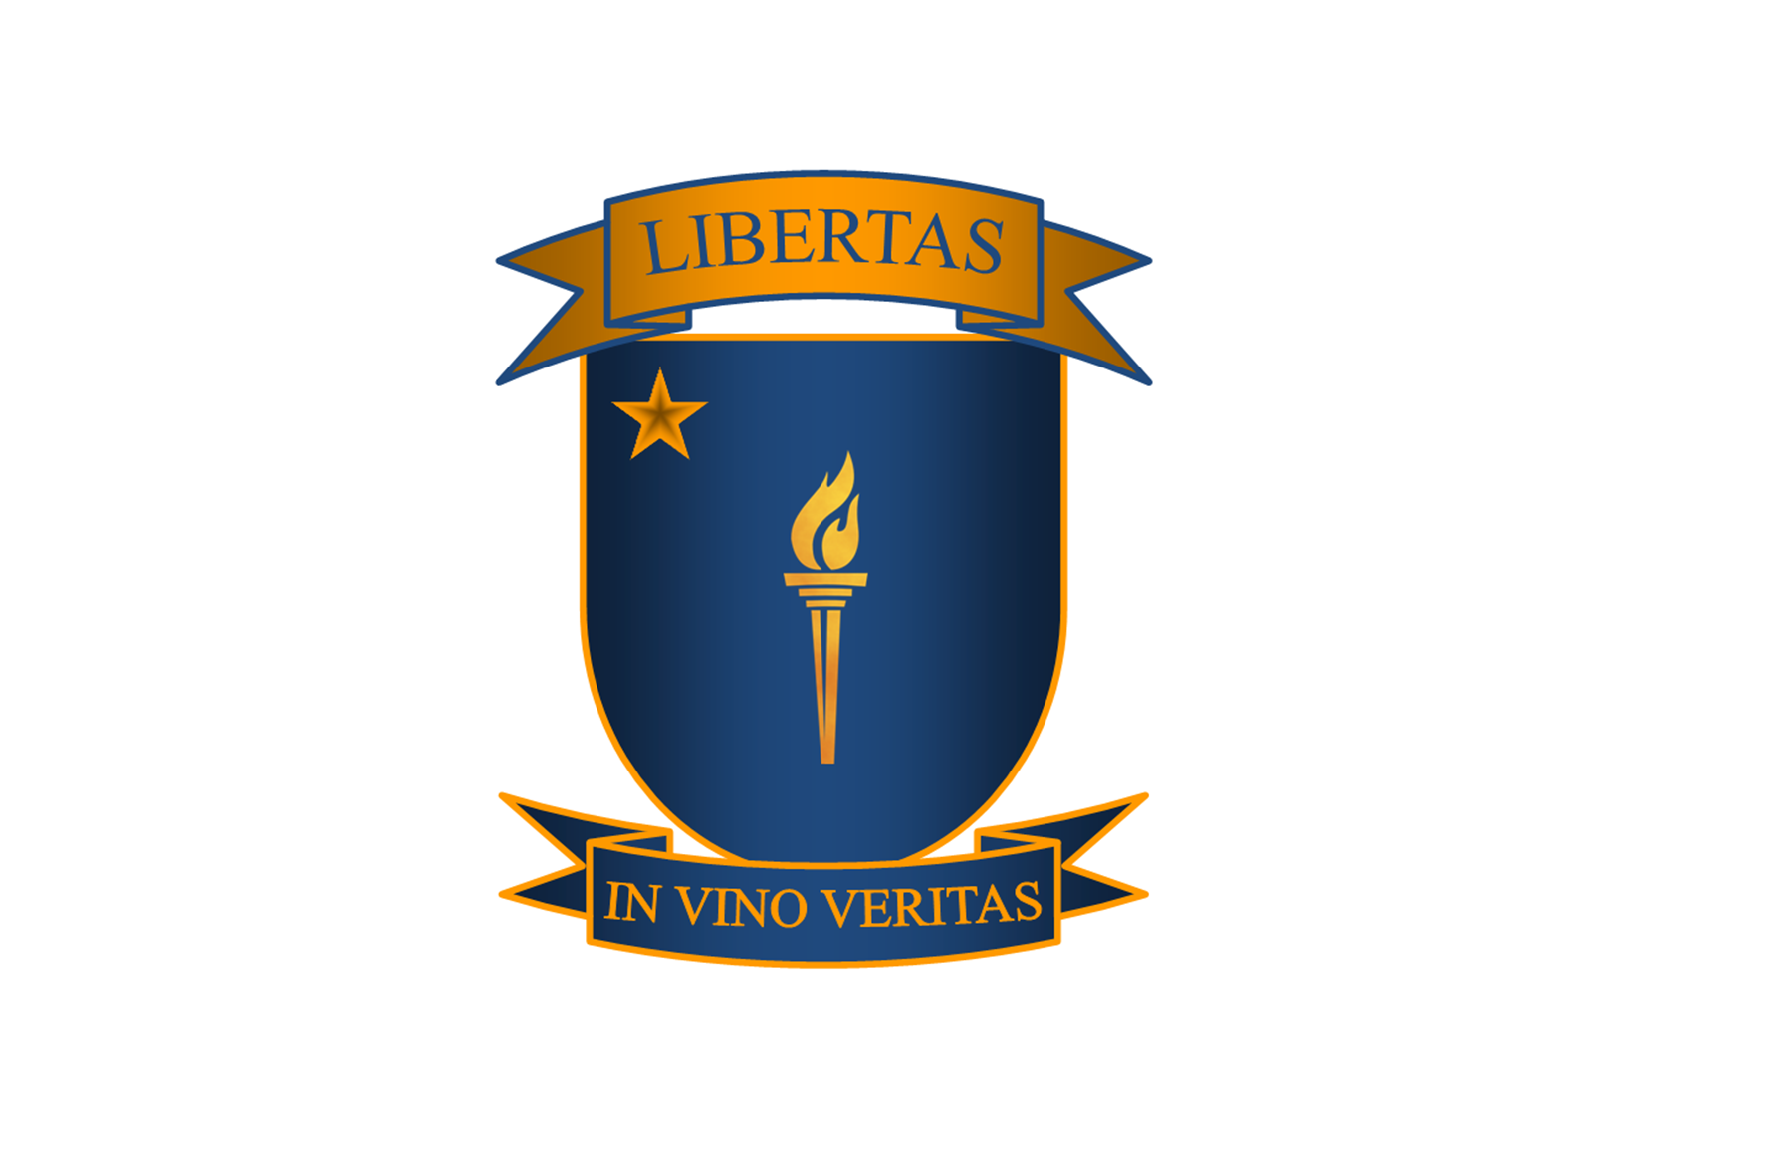 Leerlingenvereniging Libertas